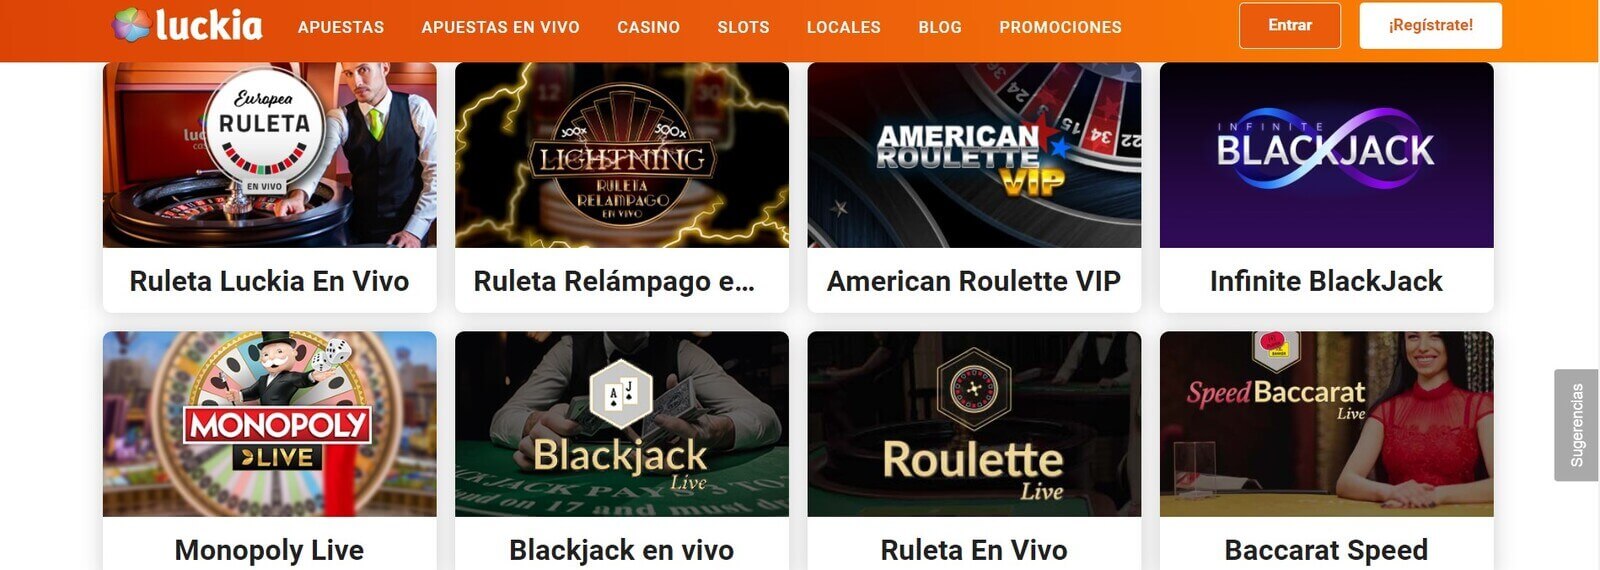 Luckia Casino en Colombia